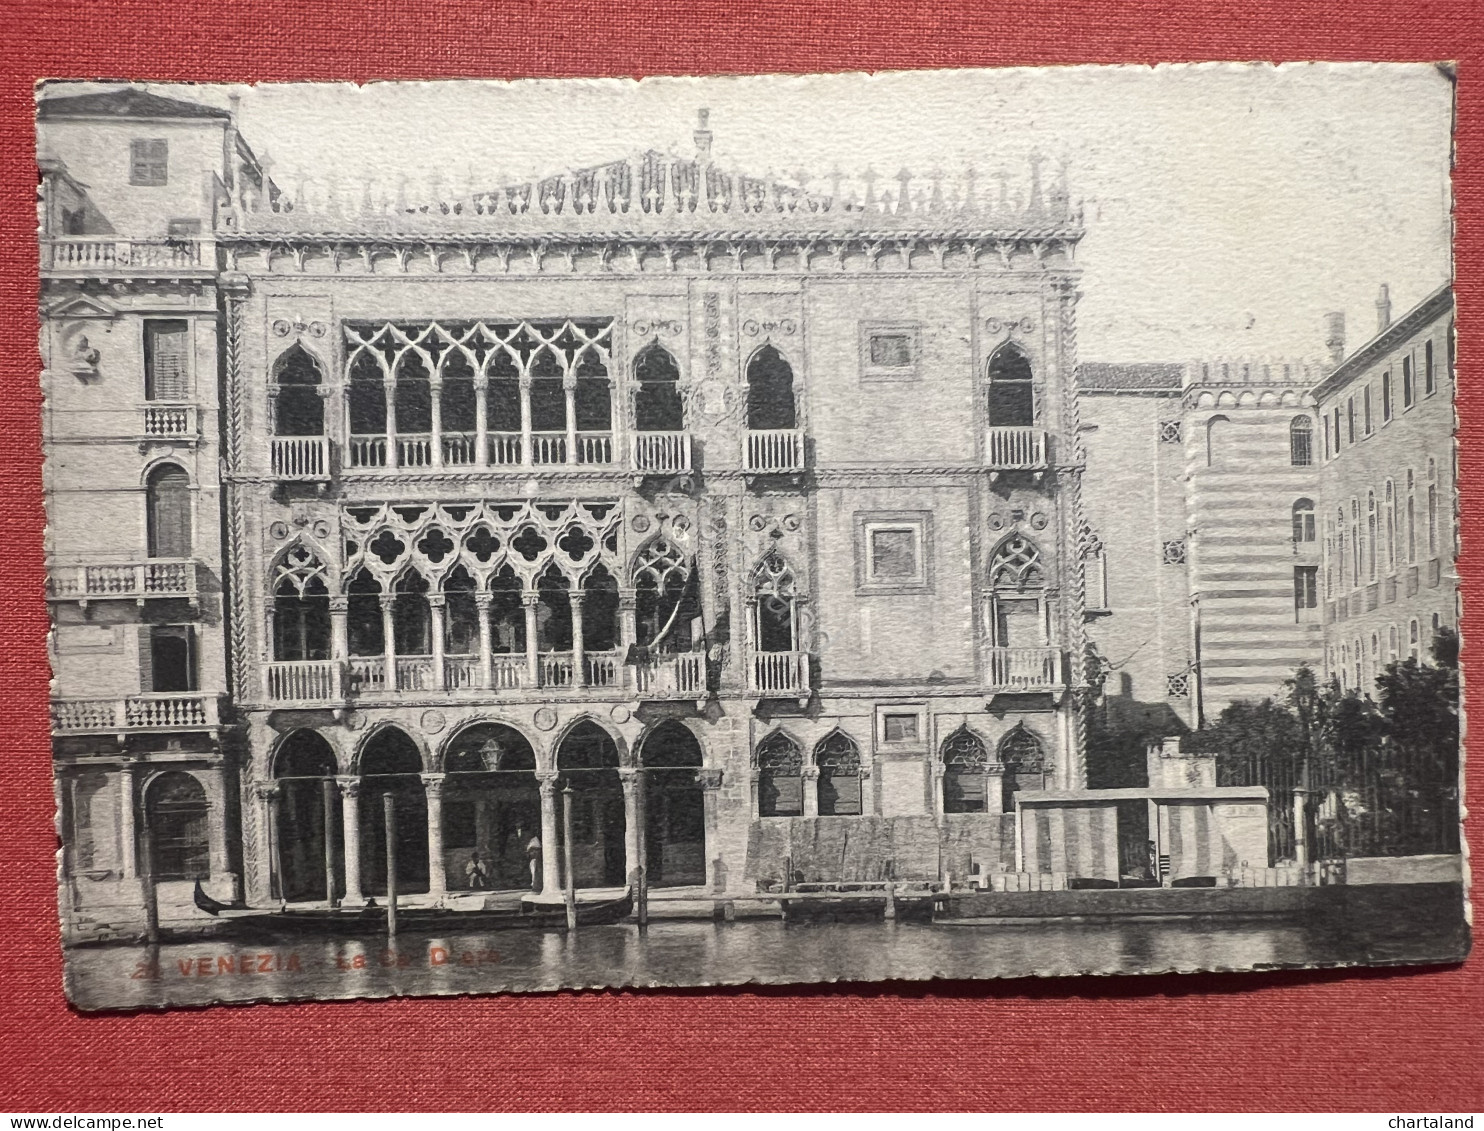 Cartolina - Venezia - La Cà D'Oro - 1906 - Venezia (Venedig)